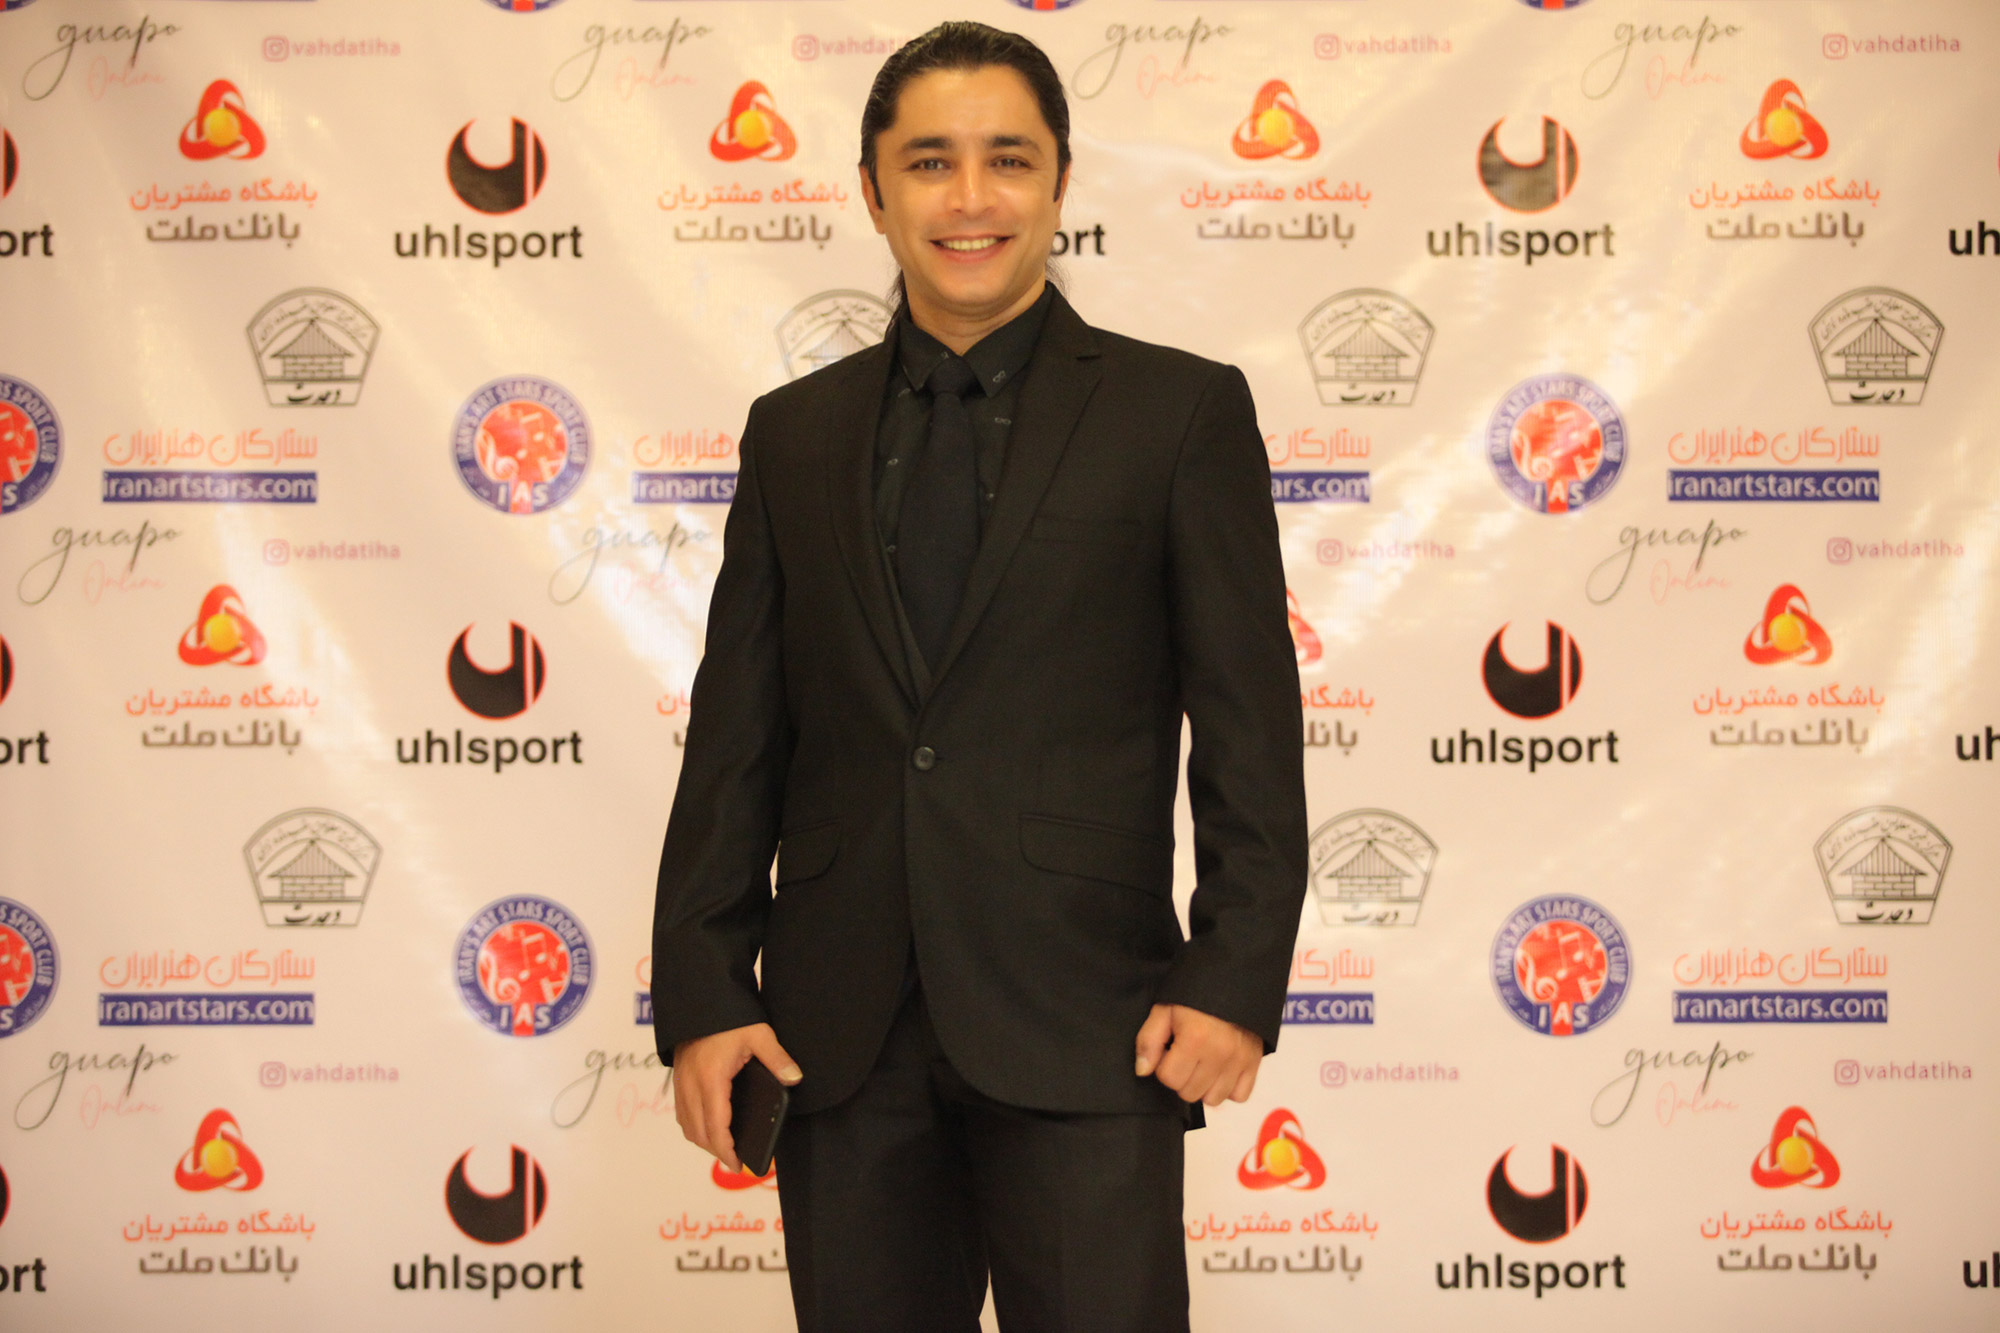 Arash Bahmani at the red carpet ceremony of charitable organizations